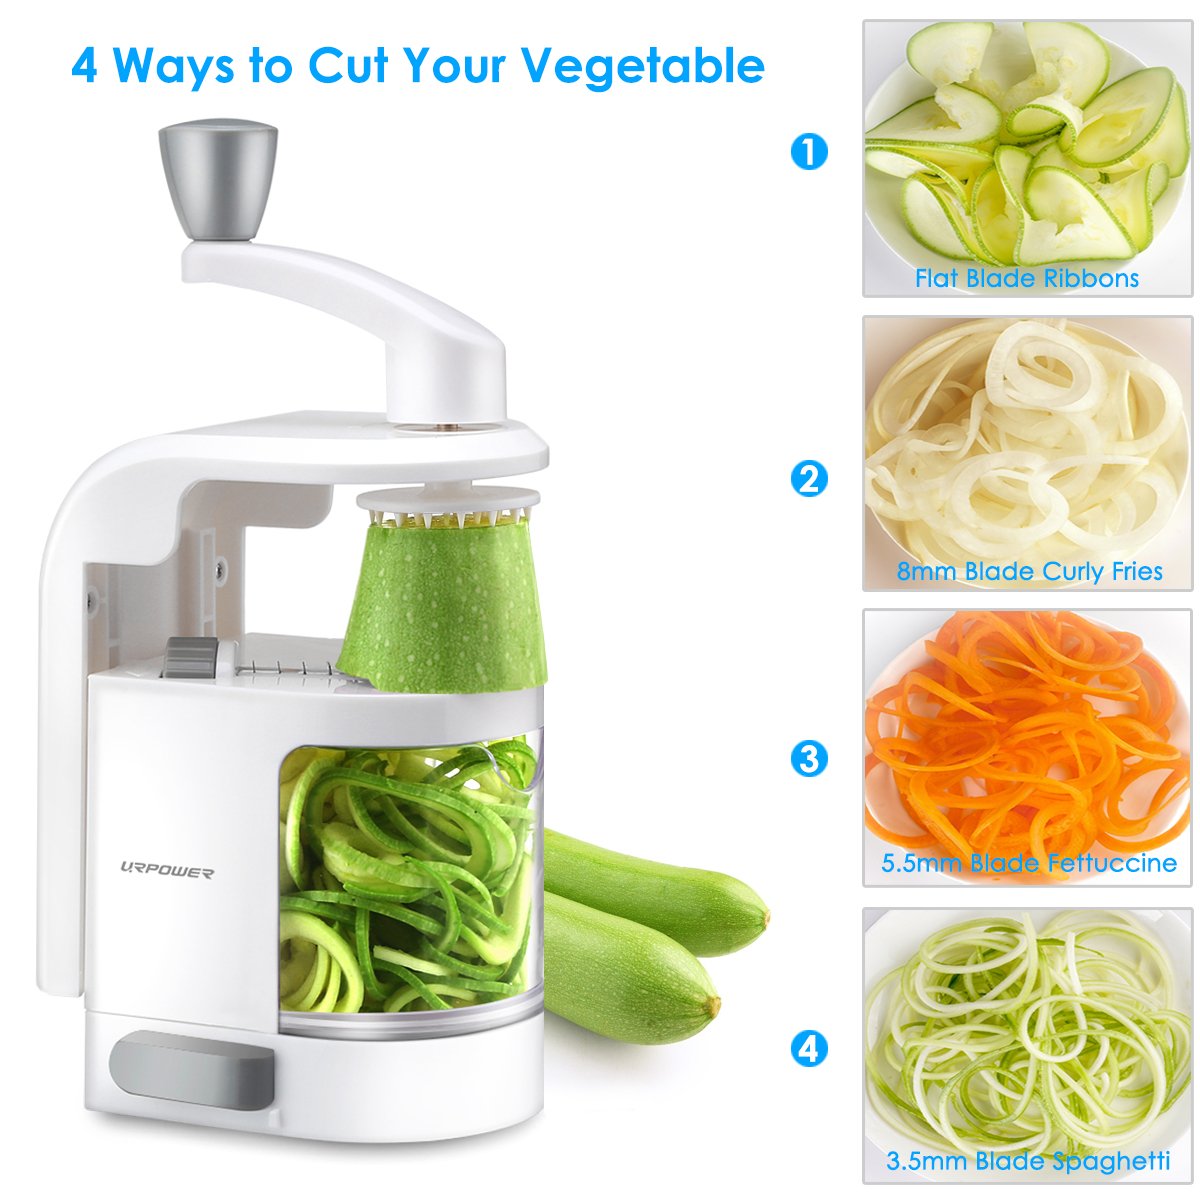 URPOWER Spiralizer Vegetable Slicer 4-Blade Vegetable Spiralizer, Veggie Pasta Spaghetti Maker, Perfect for Salad, Zucchini Noodles, Pasta and Cut Vegetables, Make Low Carb/Paleo/Gluten-Free Meals